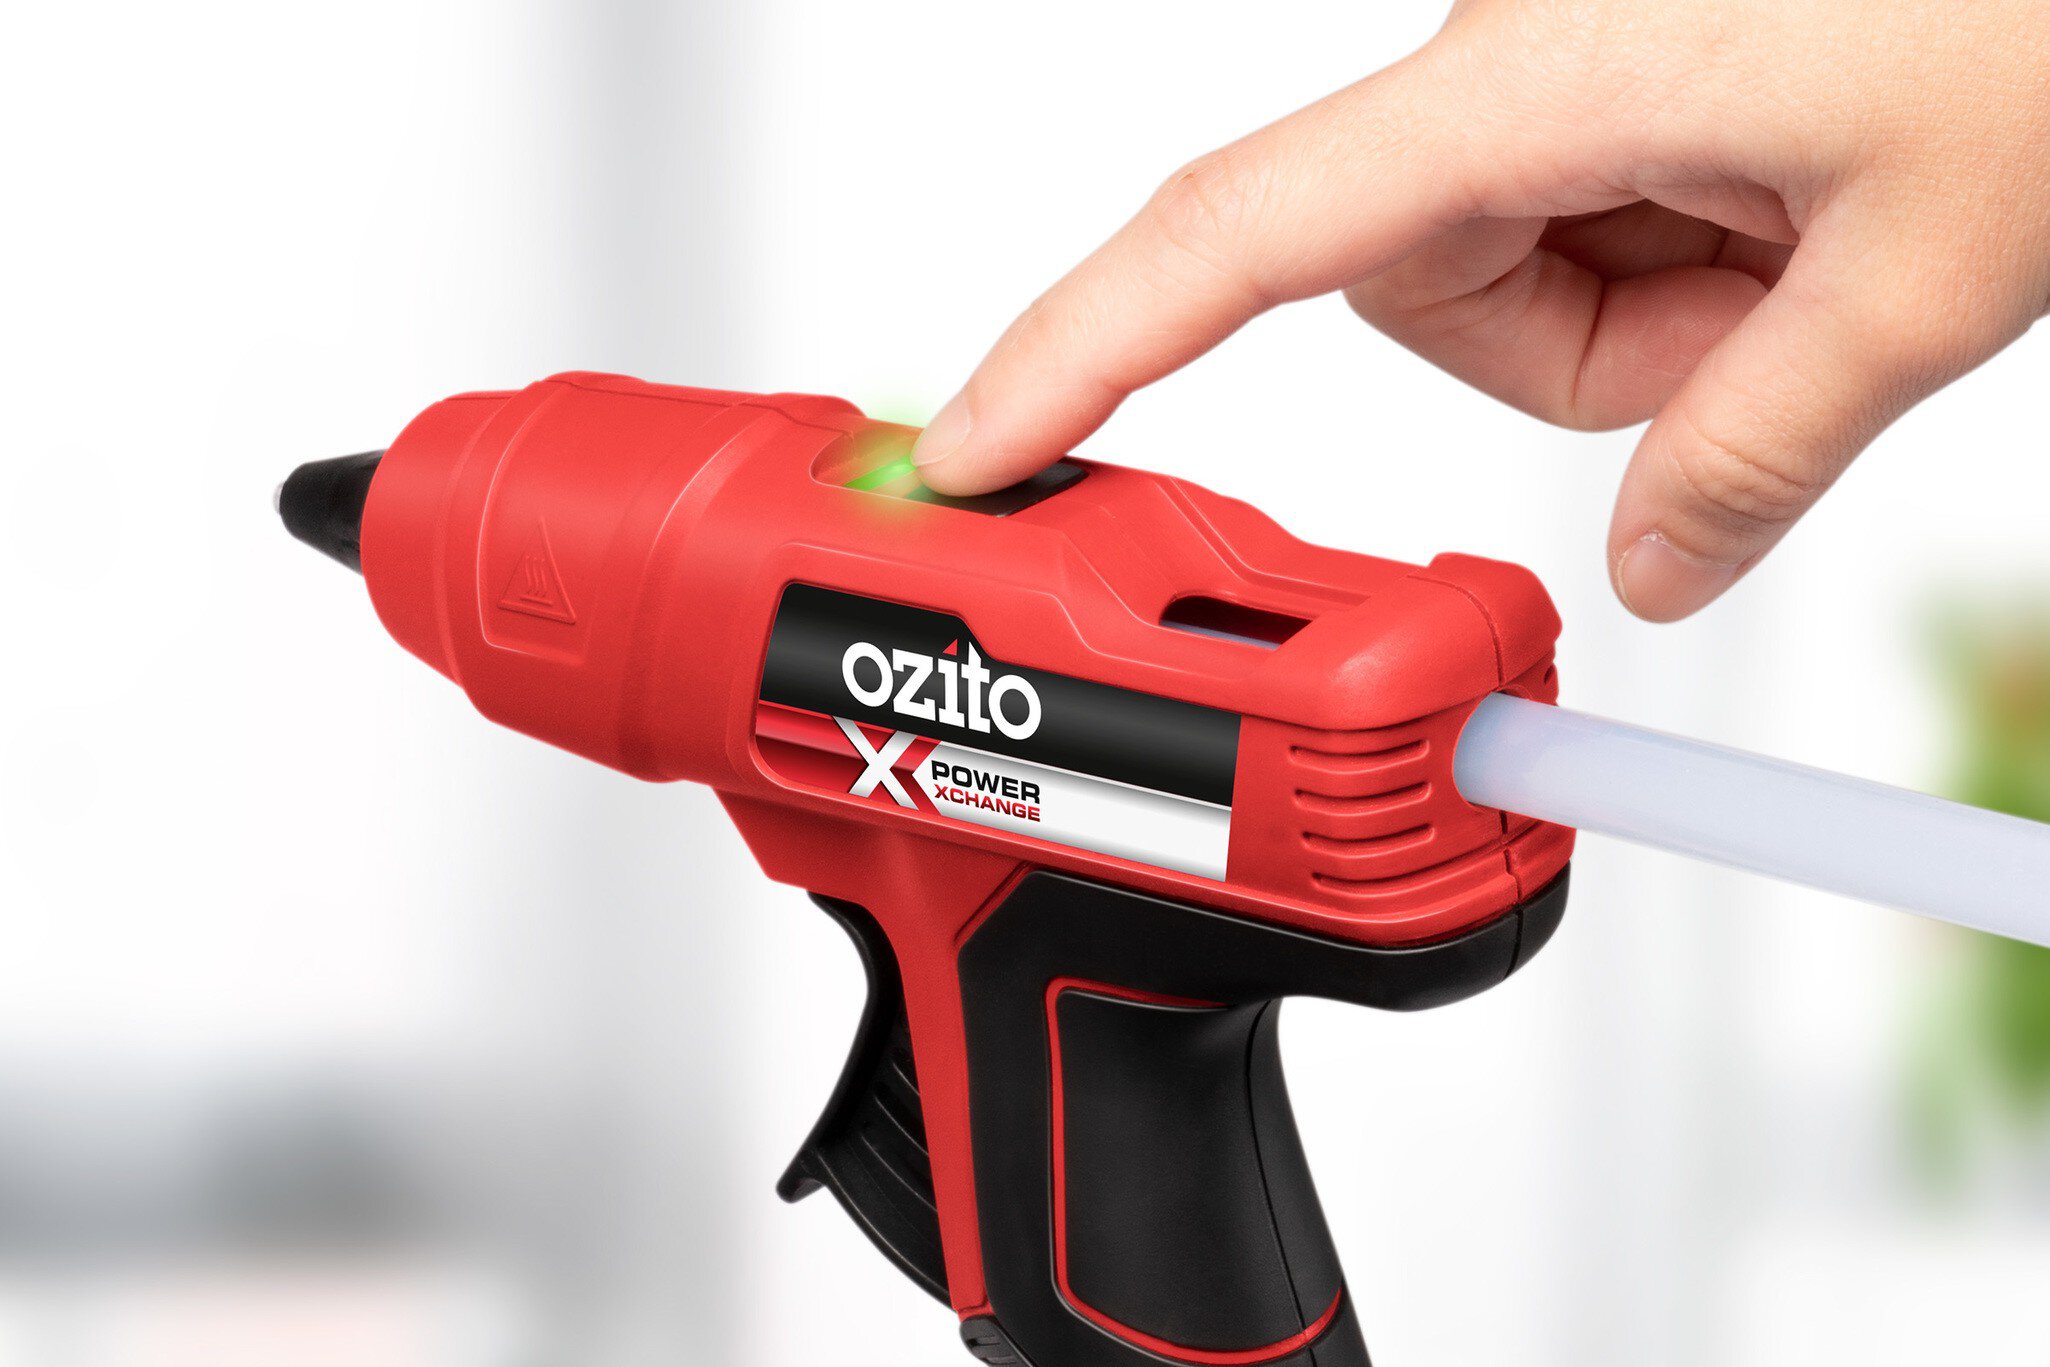 ozito-cordless-hot-glue-gun-3000563-detail_image-102